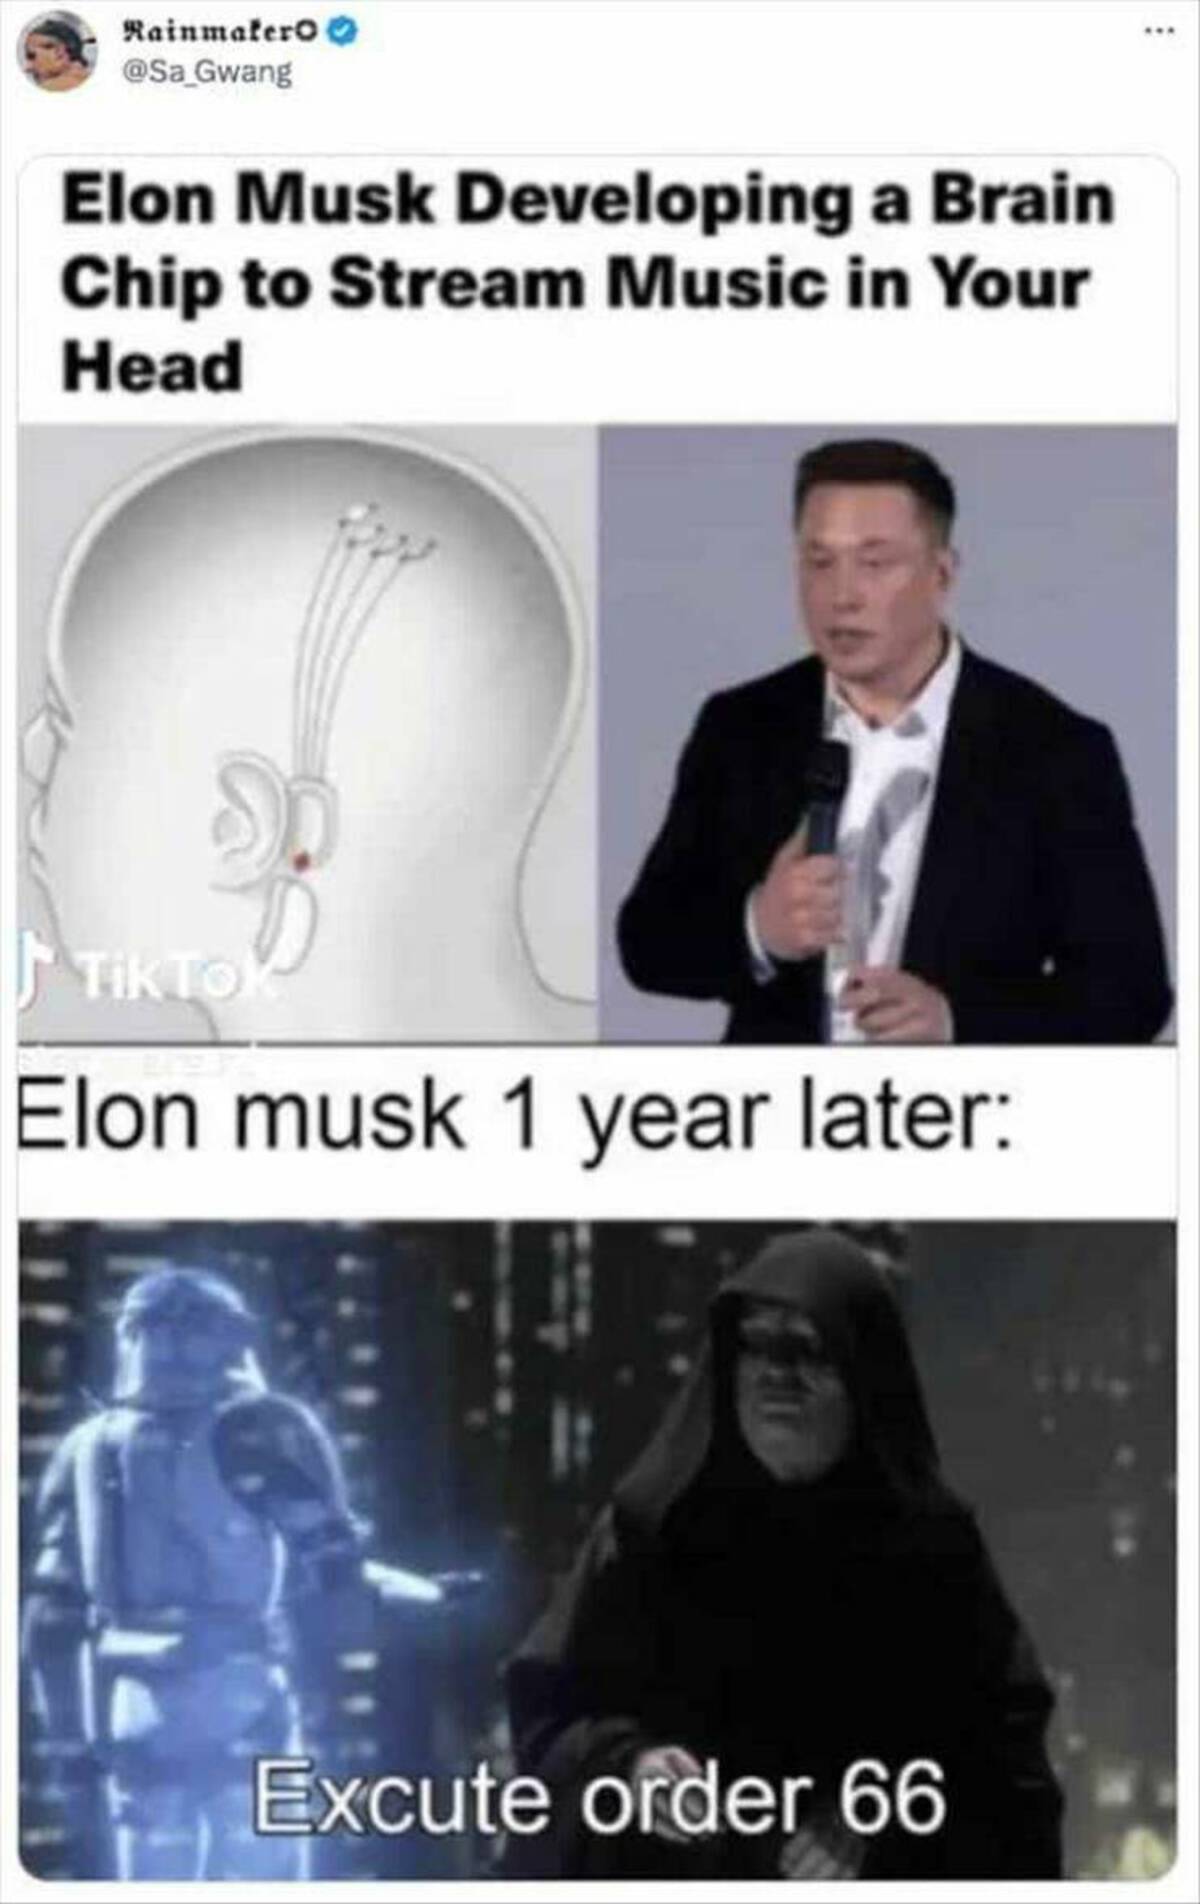 elon musk order 66 - Rainmaker Elon Musk Developing a Brain Chip to Stream Music in Your Head TikTok Elon musk 1 year later Excute order 66